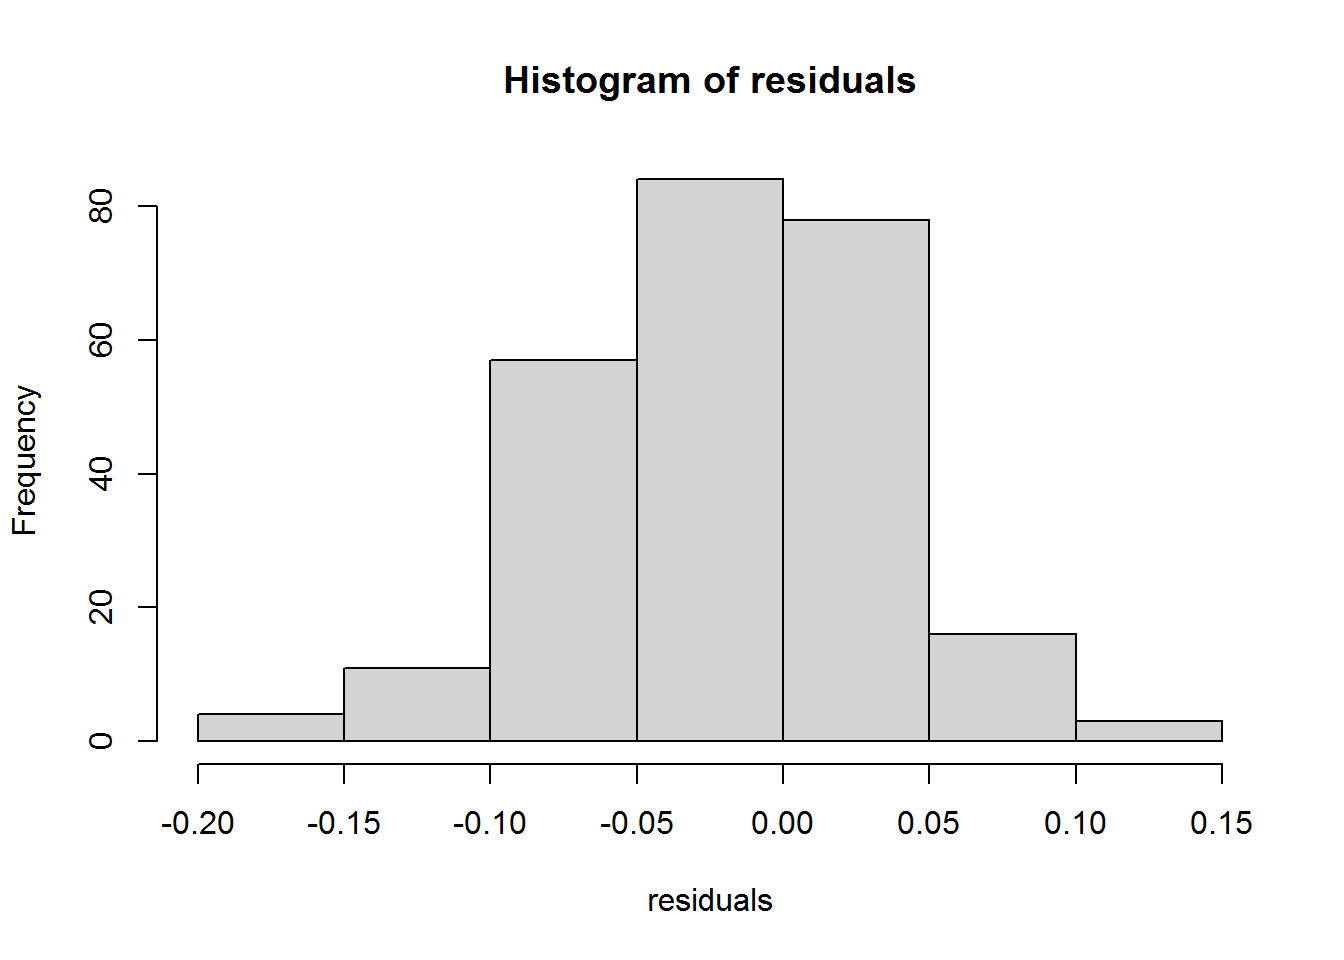 Hinstogram of residuals